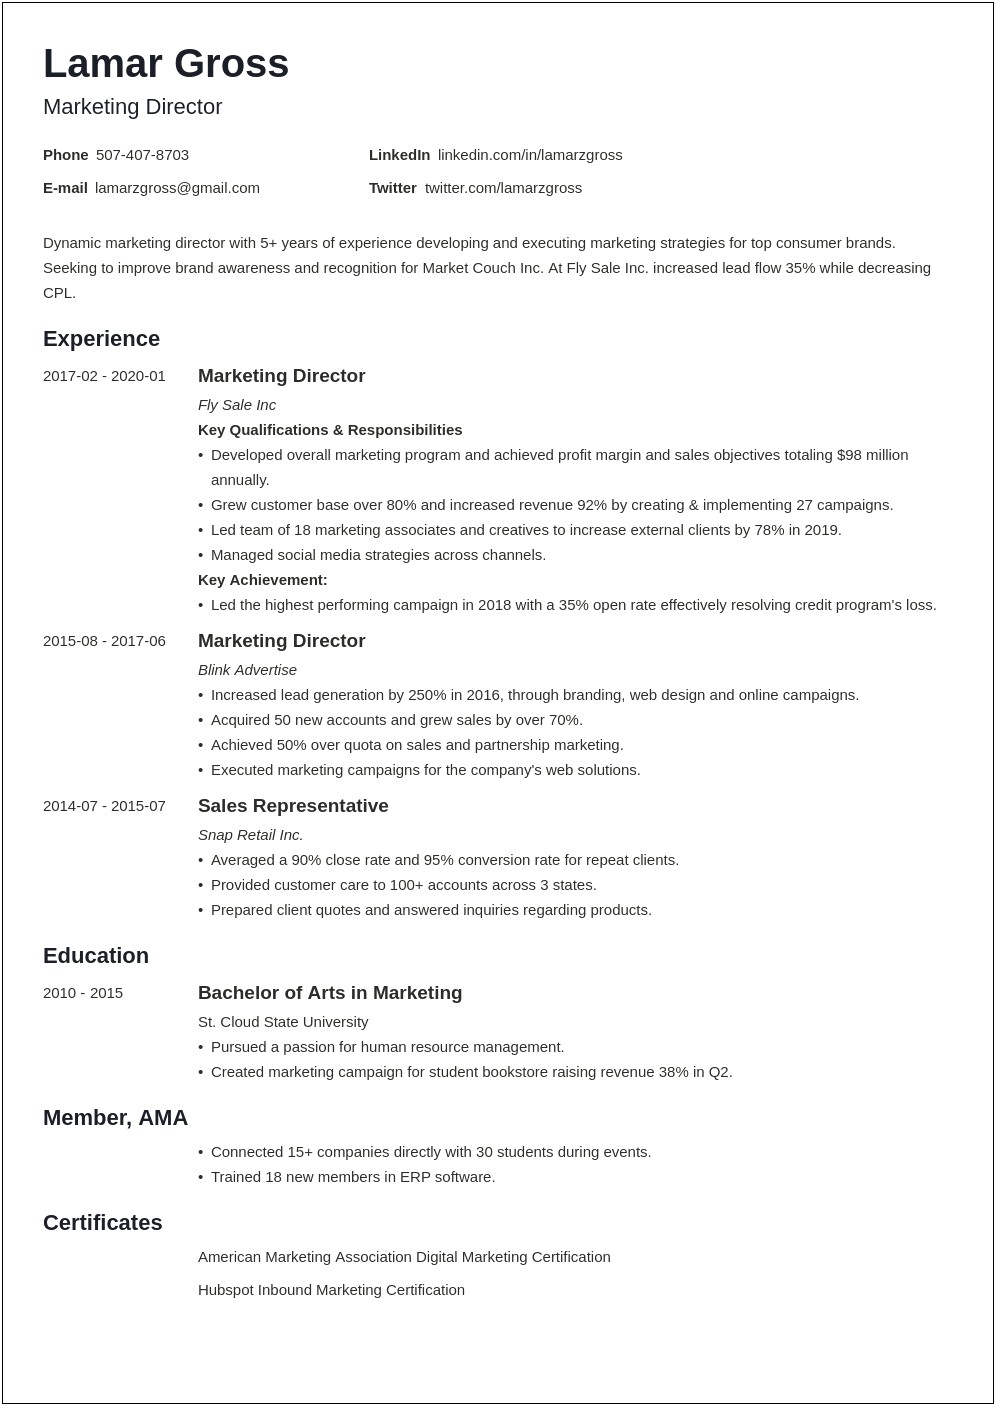 Vp Of Marketing Job Resume